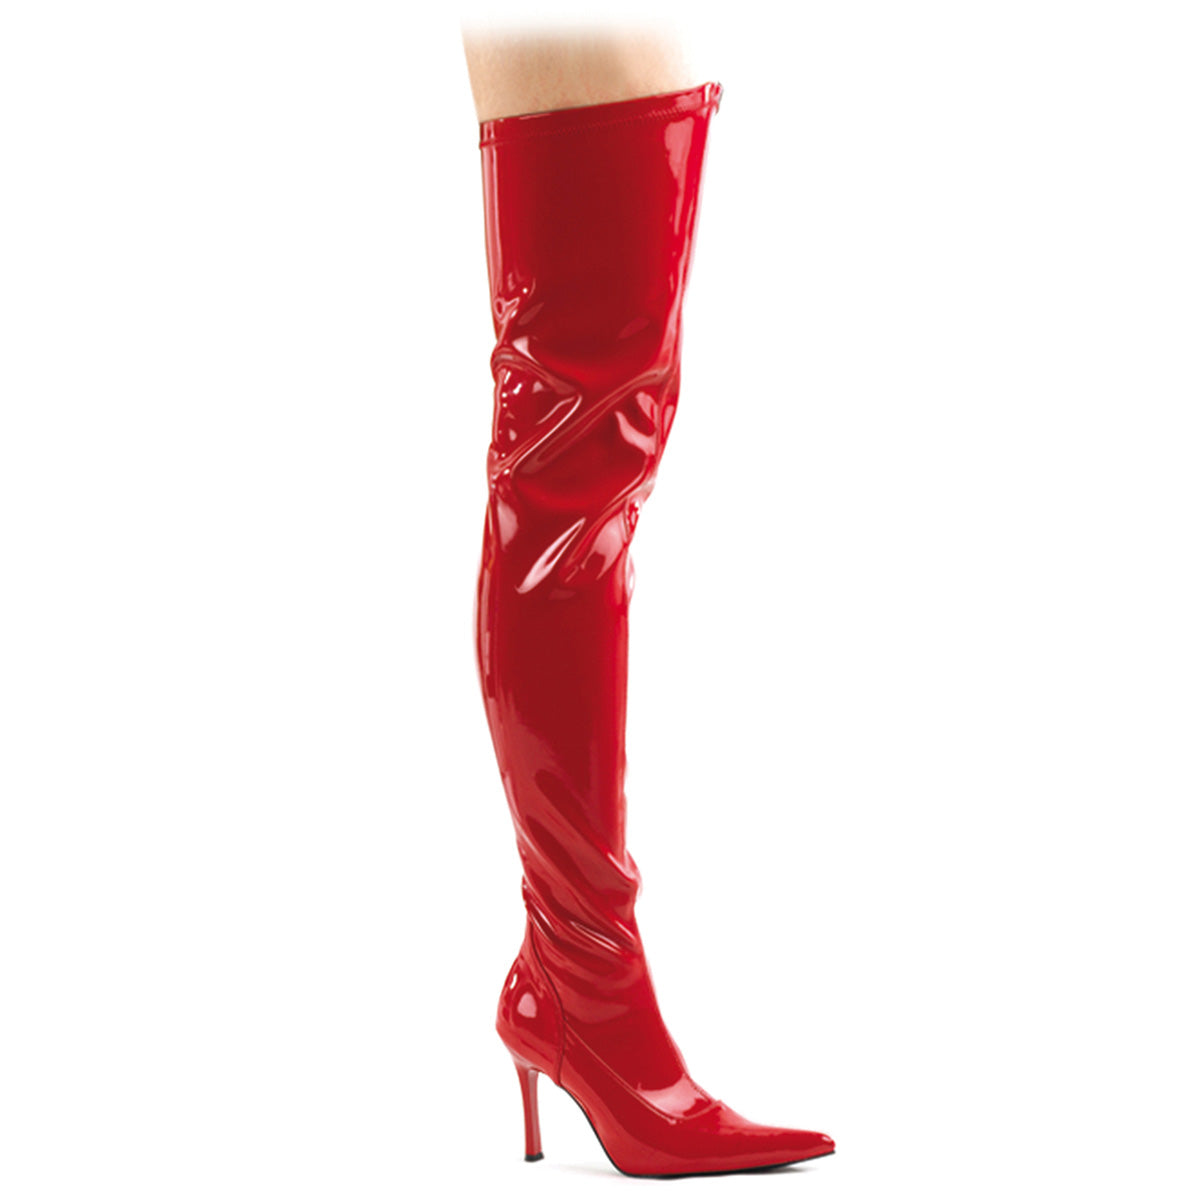 LUST-3000 Funtasma 4 Inch Heel Red Women's Boots Funtasma Costume Shoes